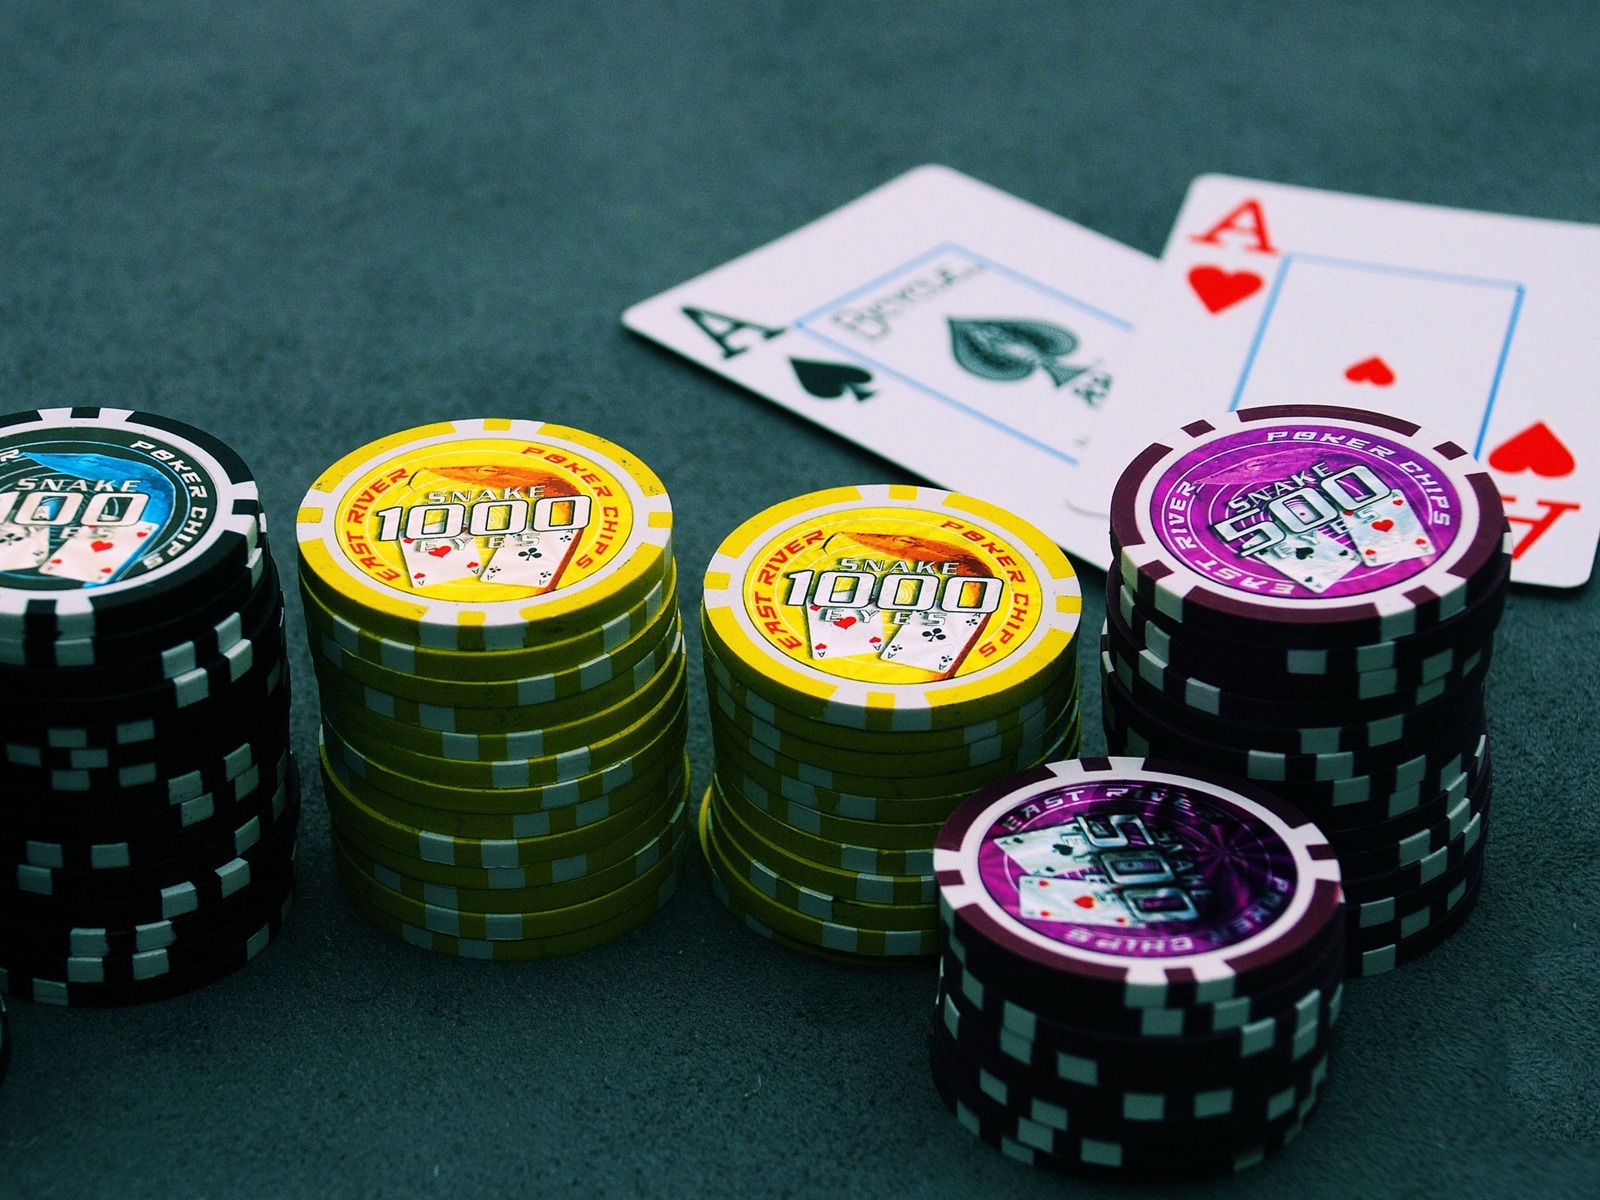 Poker for 1600 x 1200 resolution